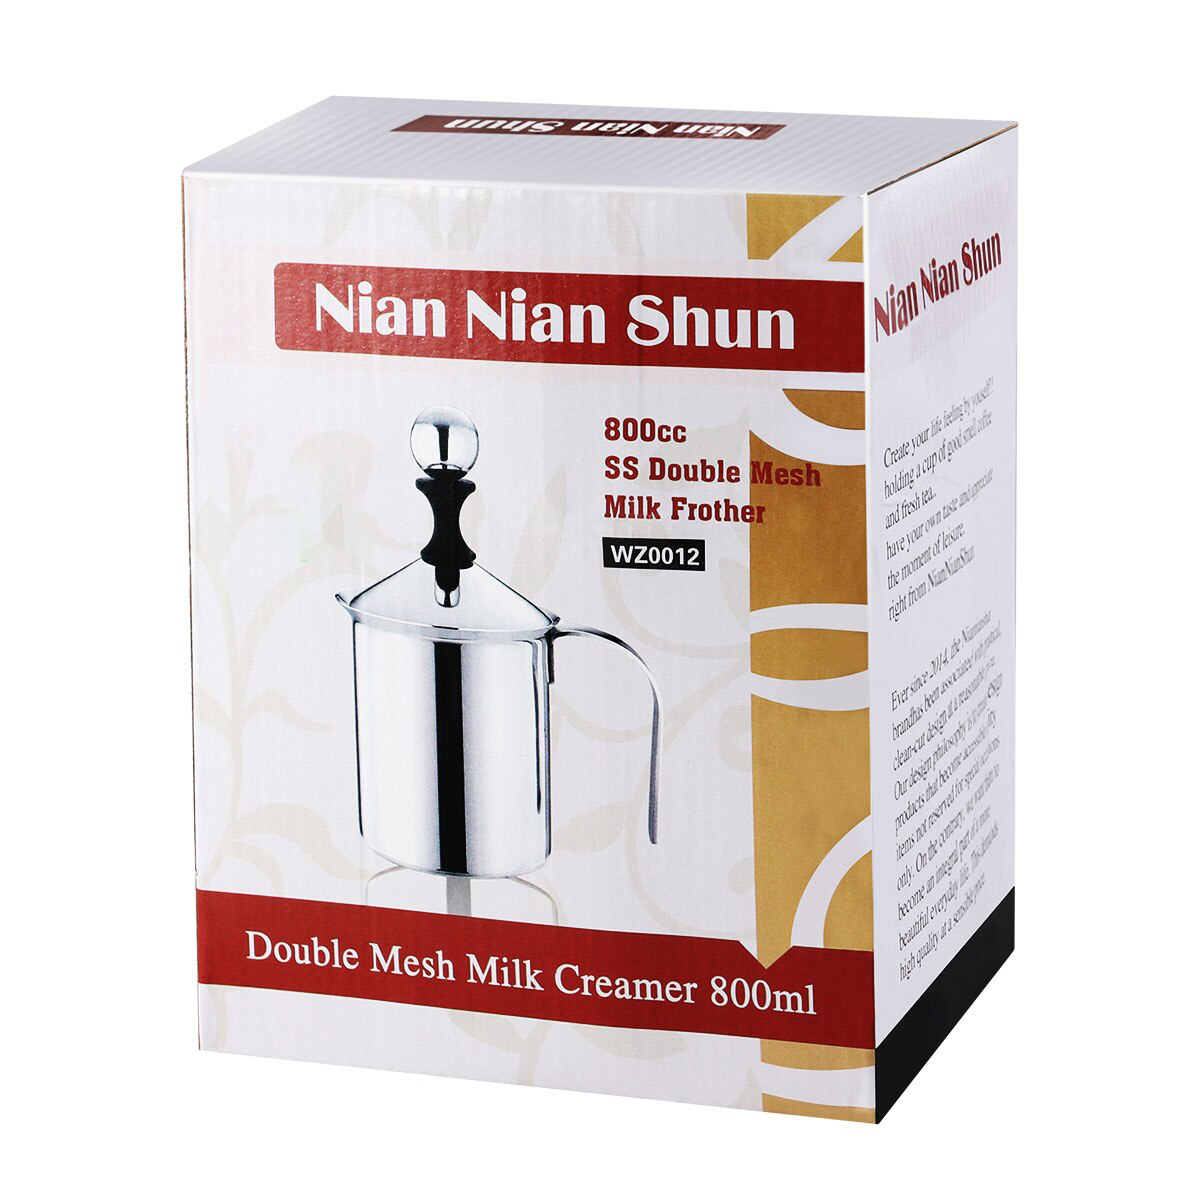 Nian Nian Shun milk frother เครื่องตีฟองนม เครื่องทำฟองนม ที่ตีฟองนมกาแฟ ที่ตีฟองนม ที่ตีฟองนมมือ ที่ตีฟองนมสด เครื่องทำโฟมนม สแตนเลส ขนาด800 cc T1422